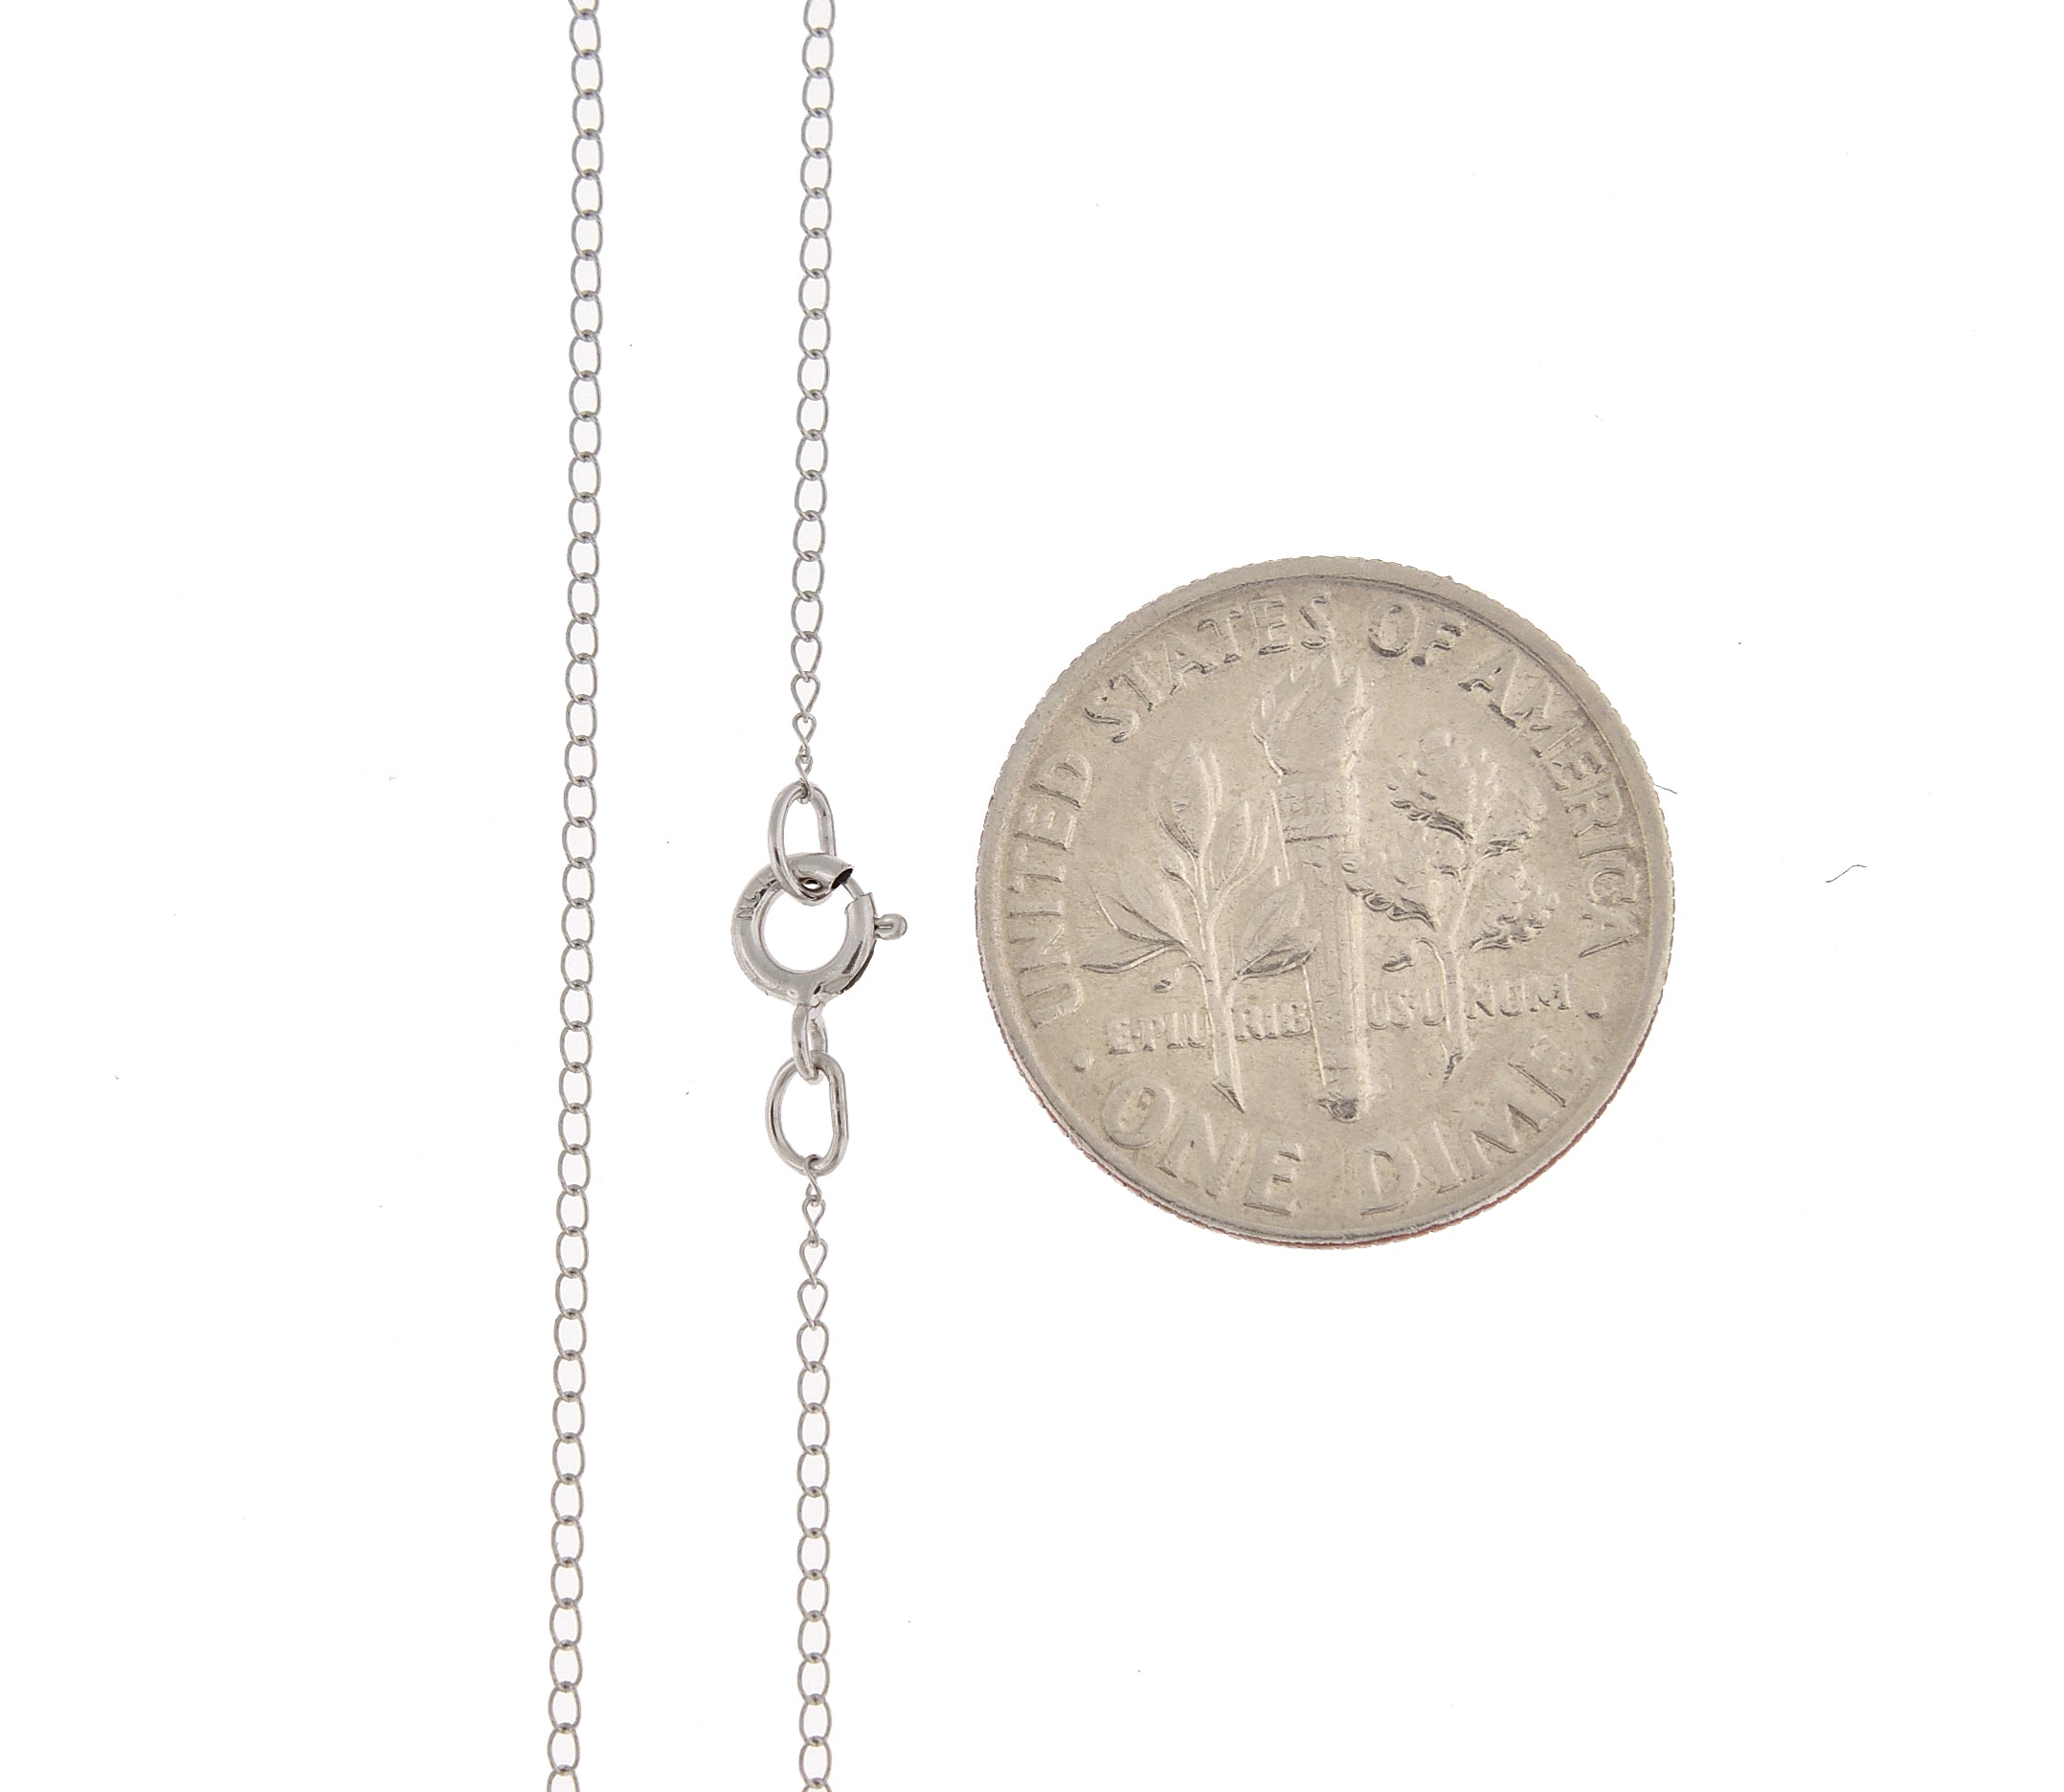 14K White Gold 0.5mm Thin Curb Bracelet Anklet Choker Necklace Pendant Chain